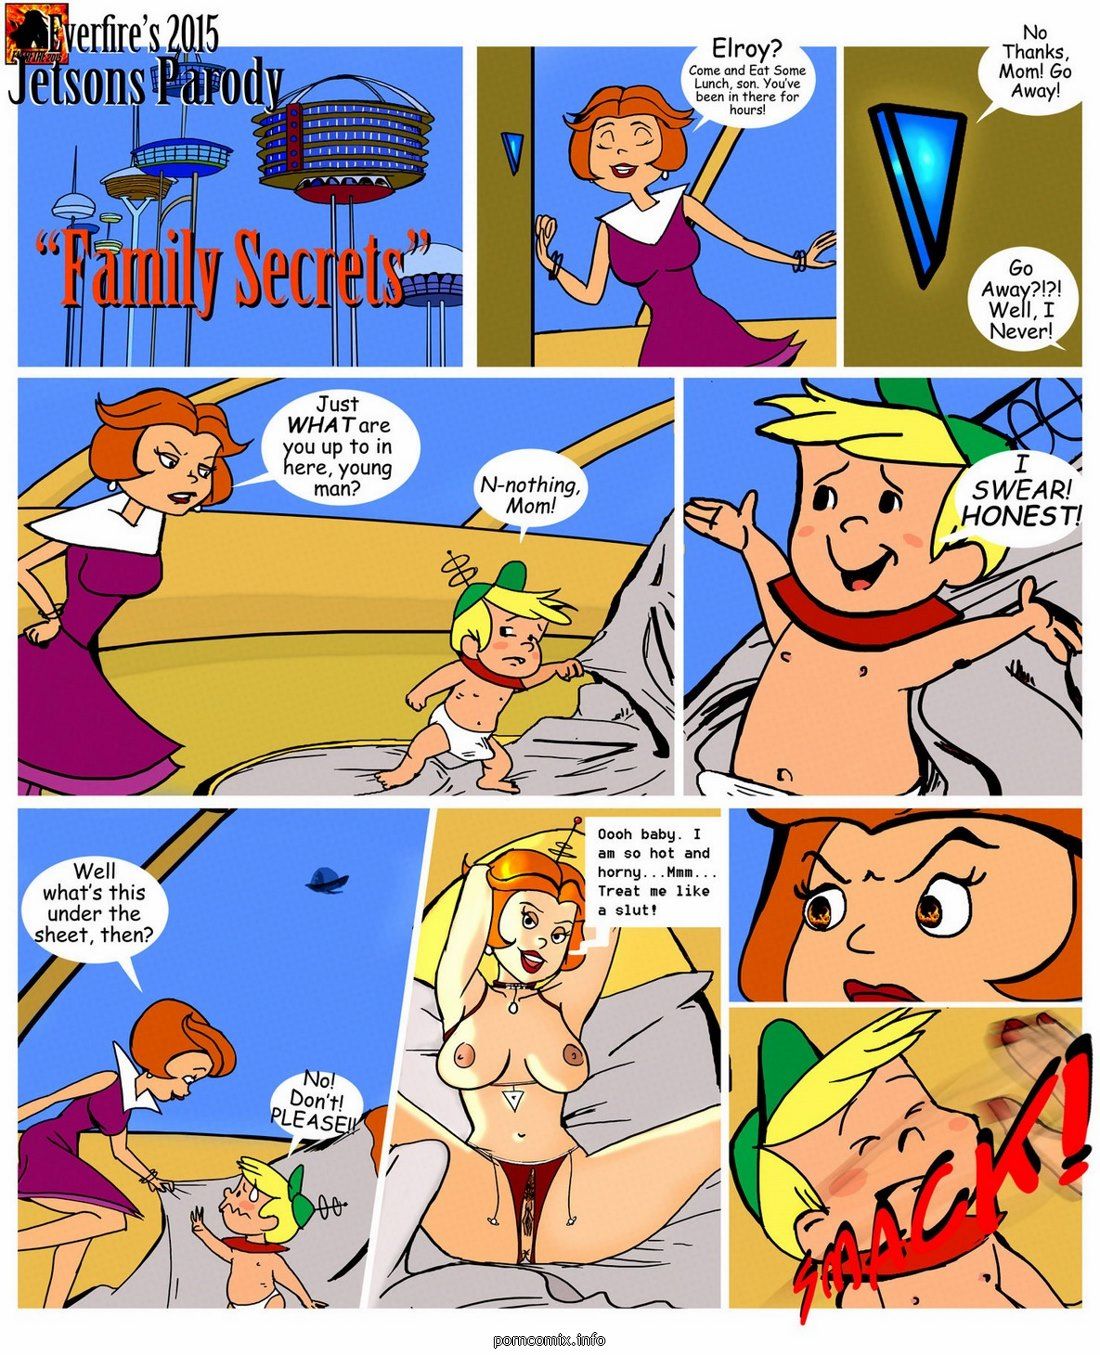 Everfire, Family Secrets - Jetsons page 1